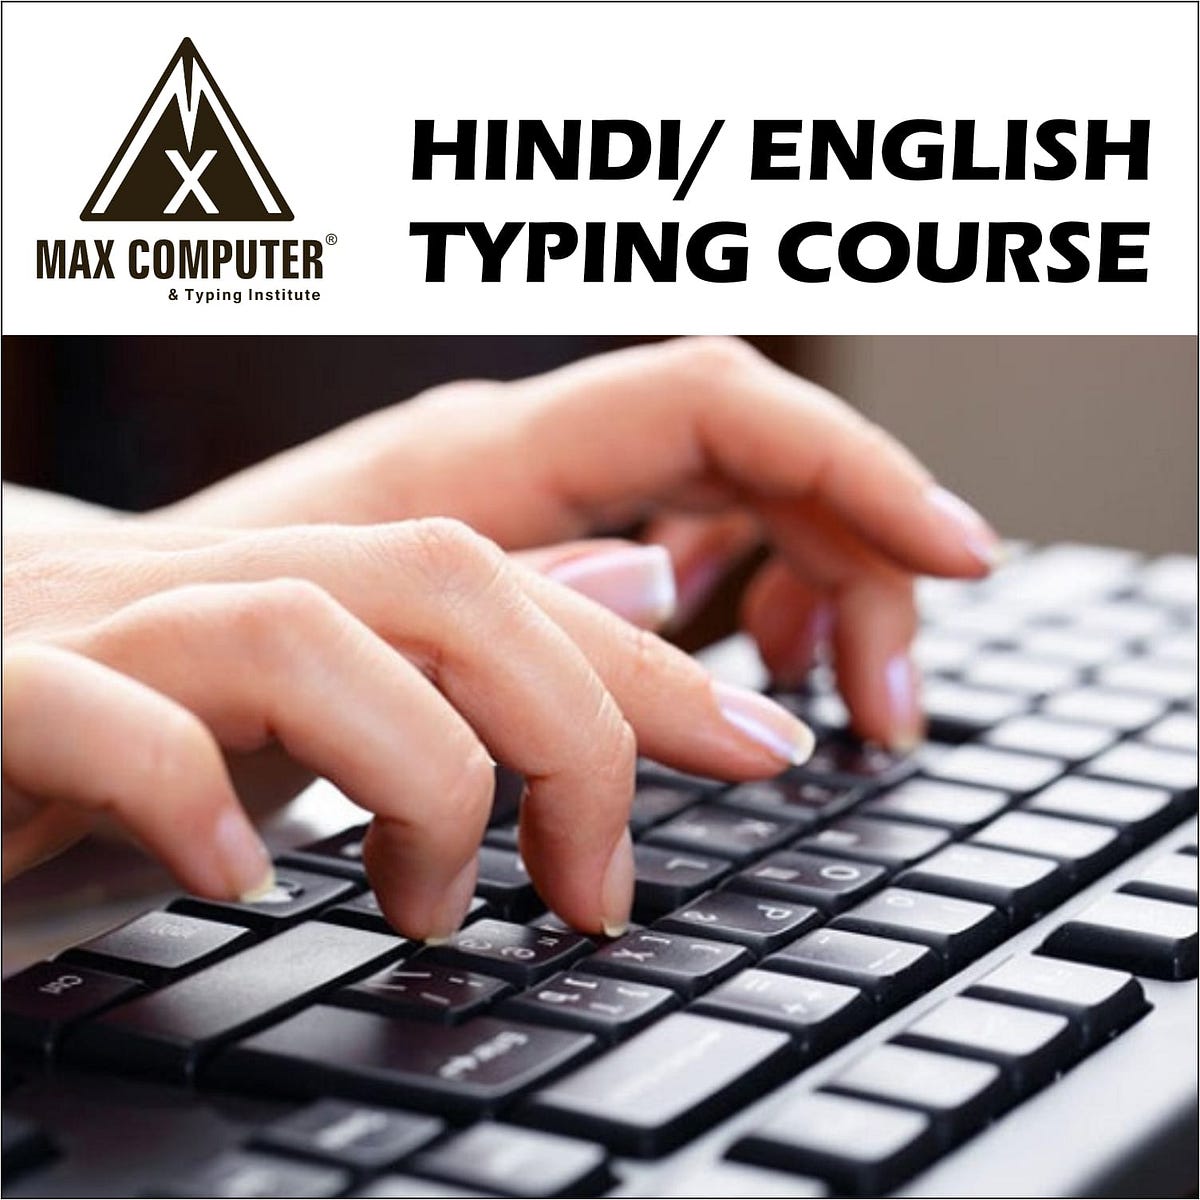 COMPUTER BASED HINDI ENGLISH TYPING